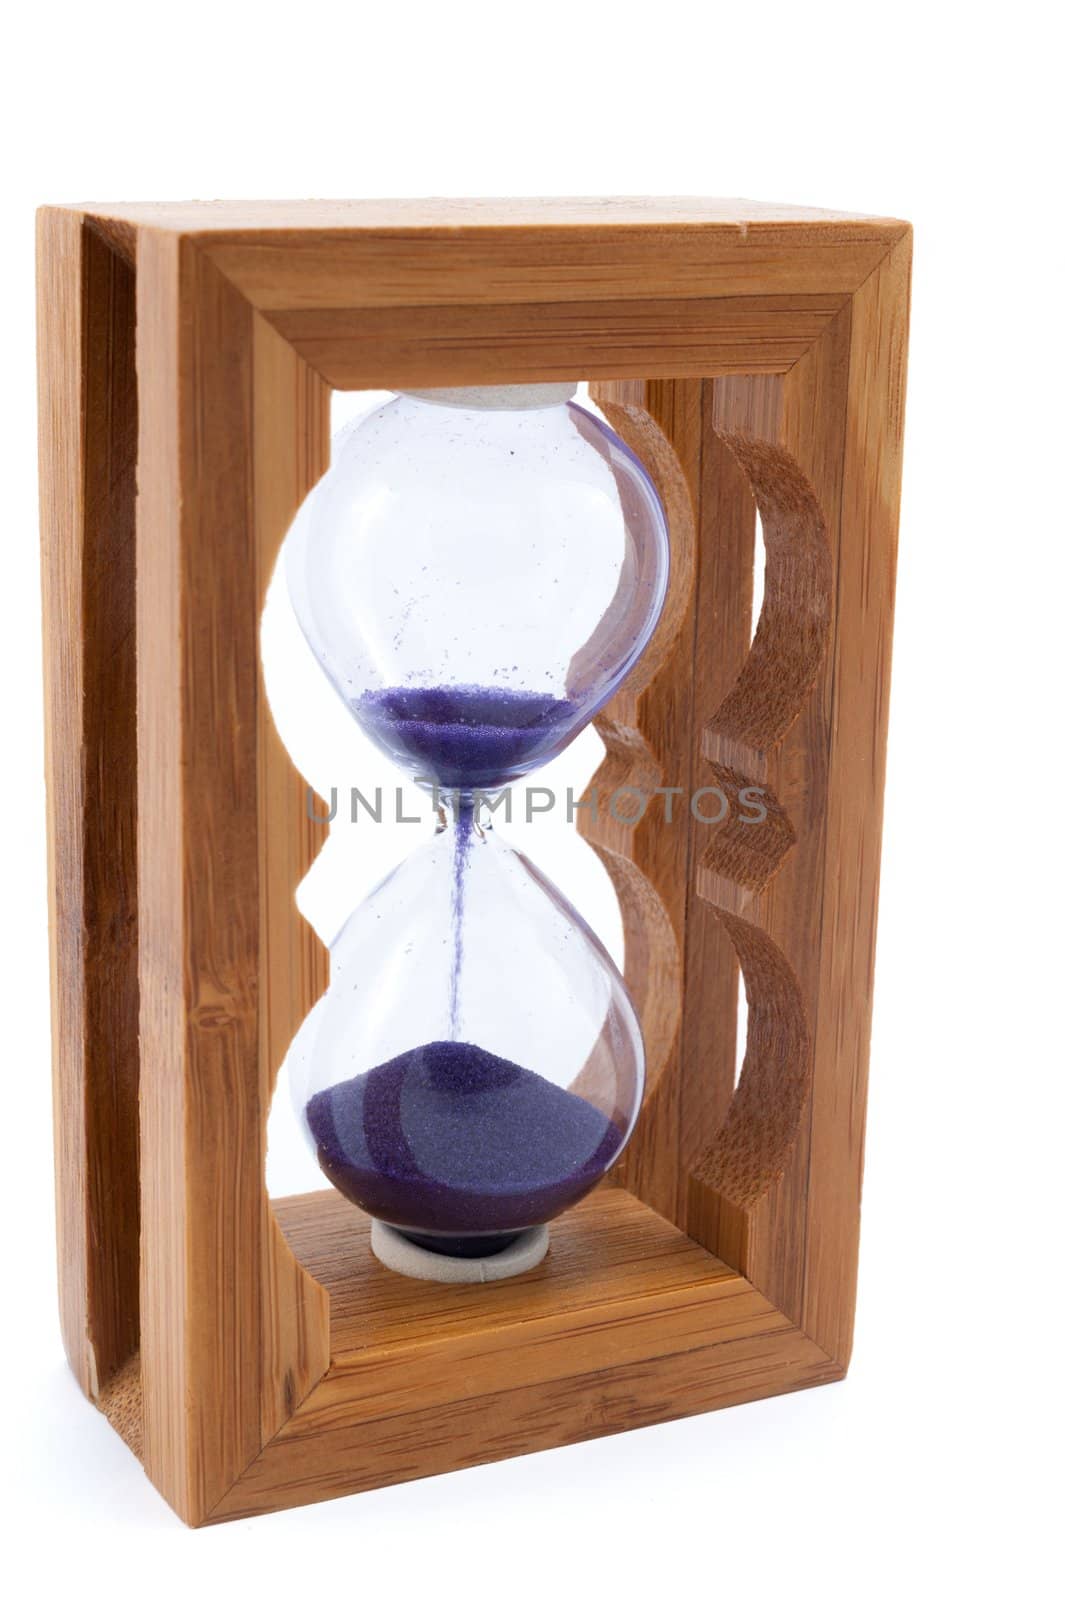 Hourglass by raywoo